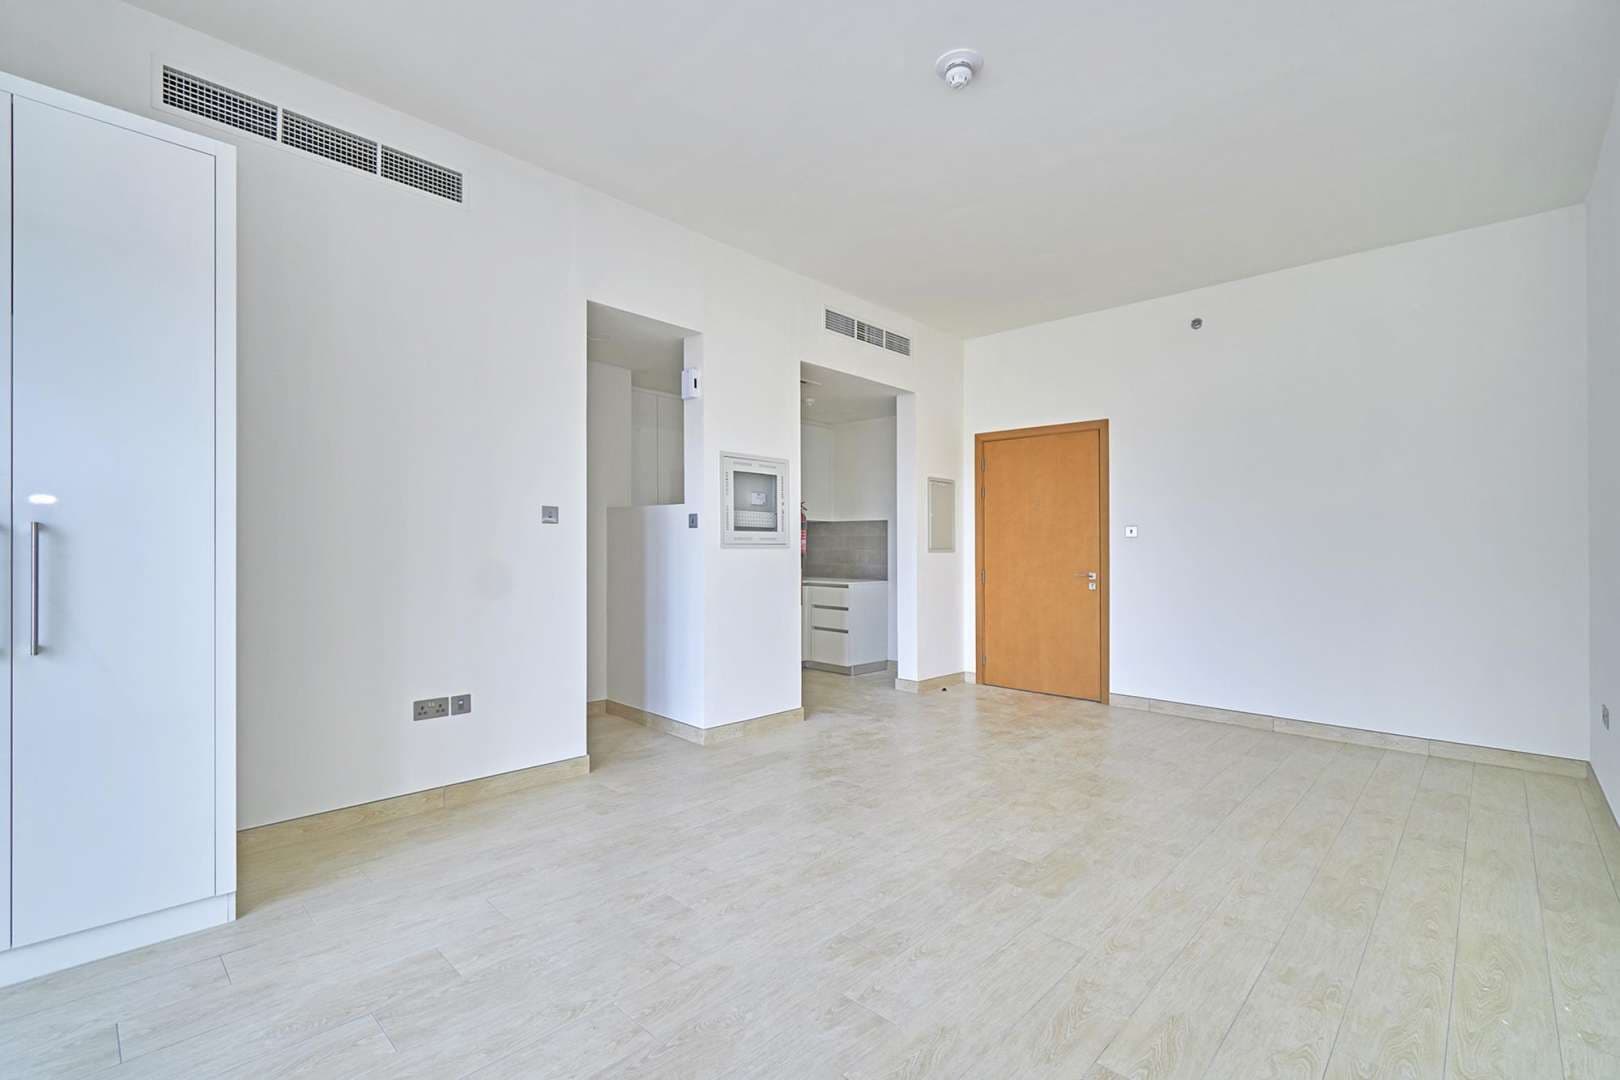 Studio Bedroom Apartment For Rent Genesis By Meraki Lp06173 Cb40fb624d1e80.jpg